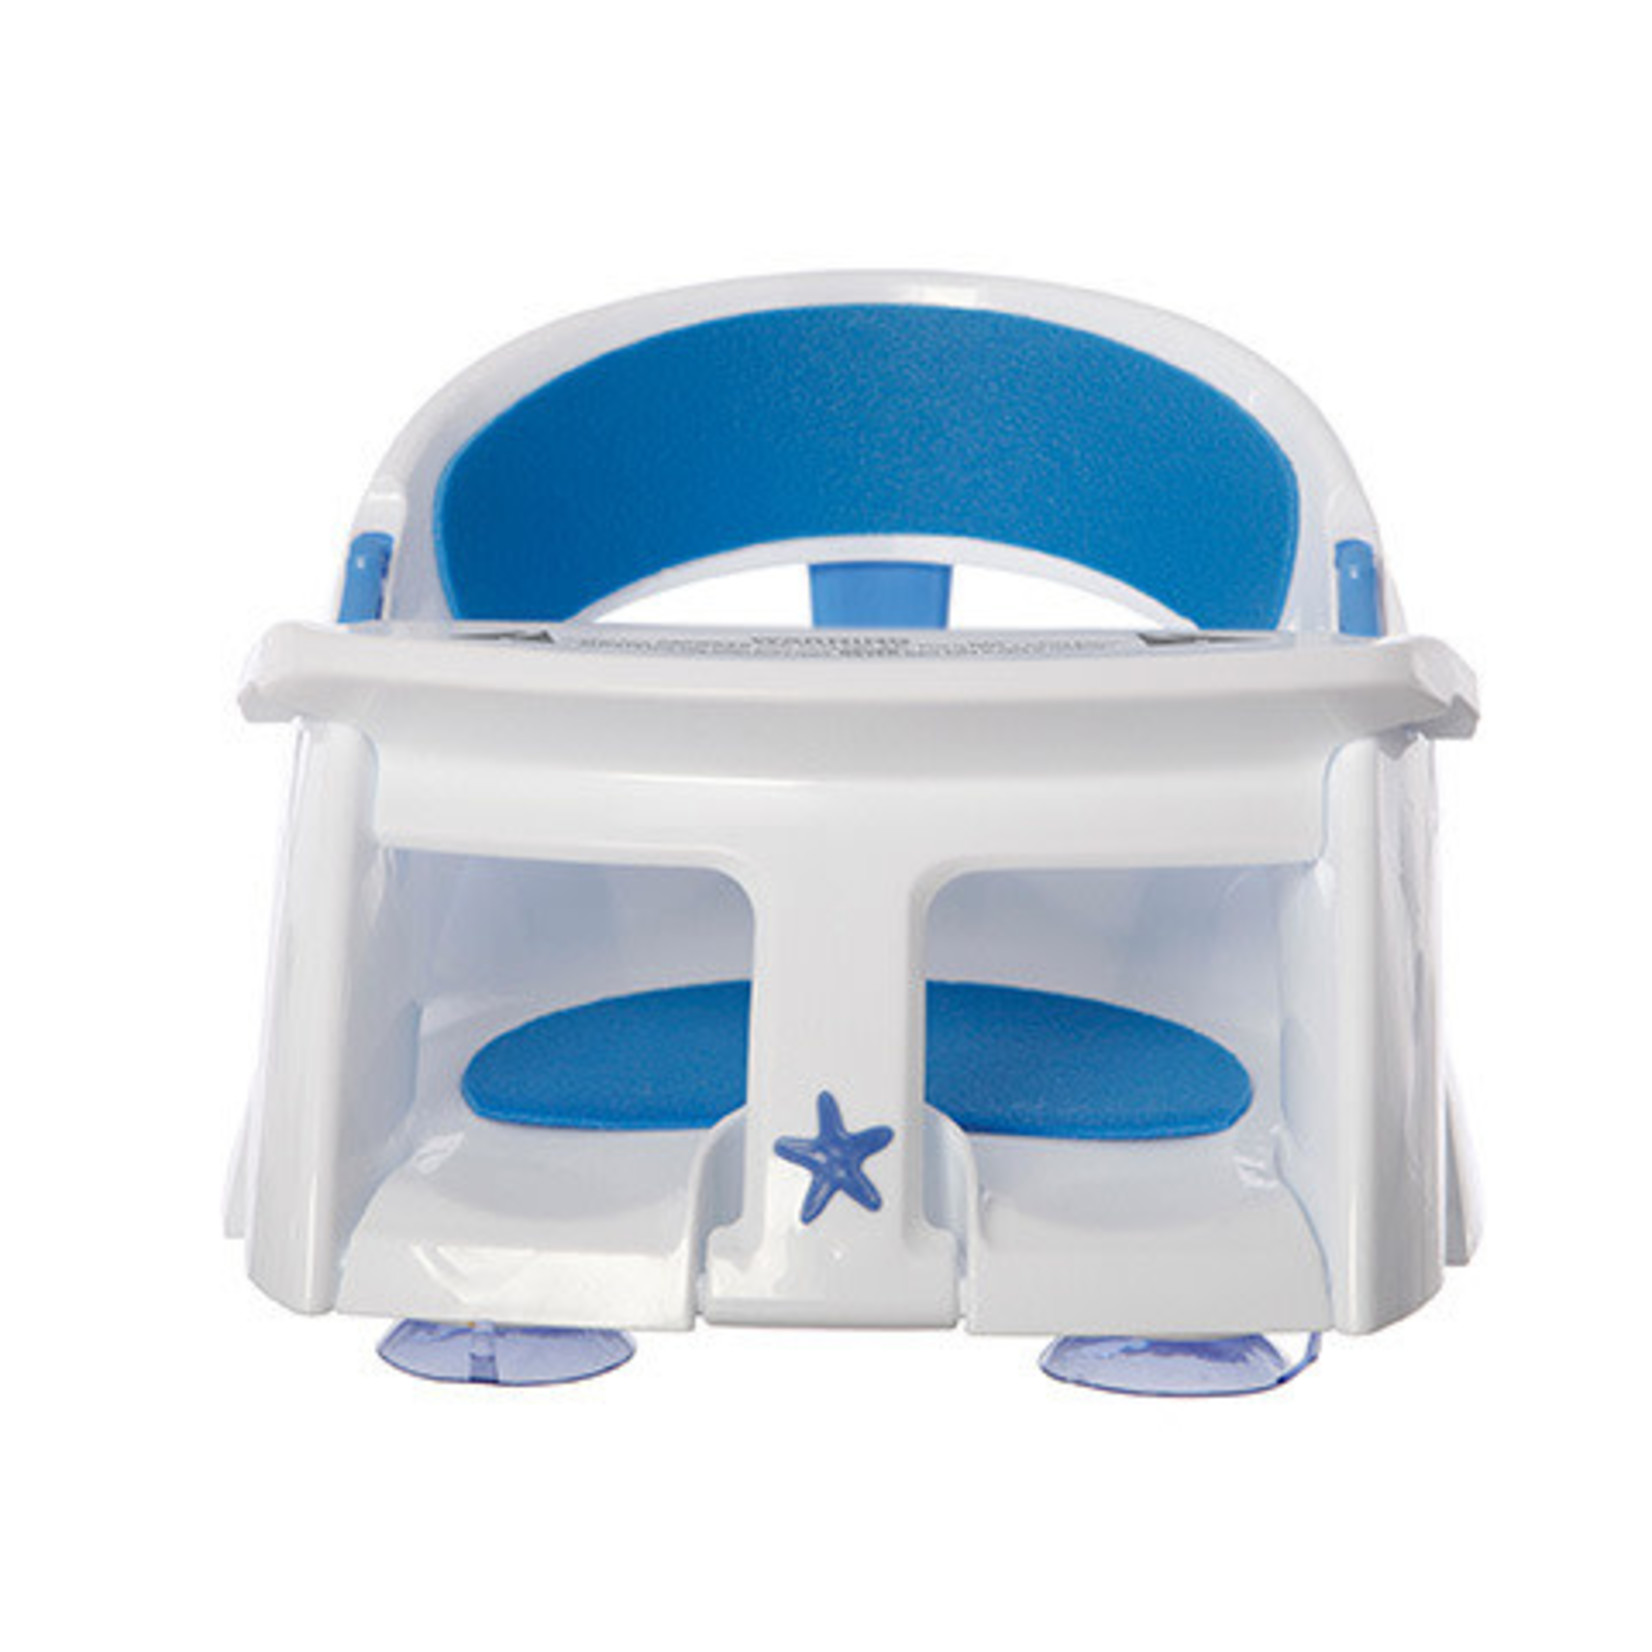 Dreambaby deluxe bath seat with foam padding&heat sensing indicator(F661)